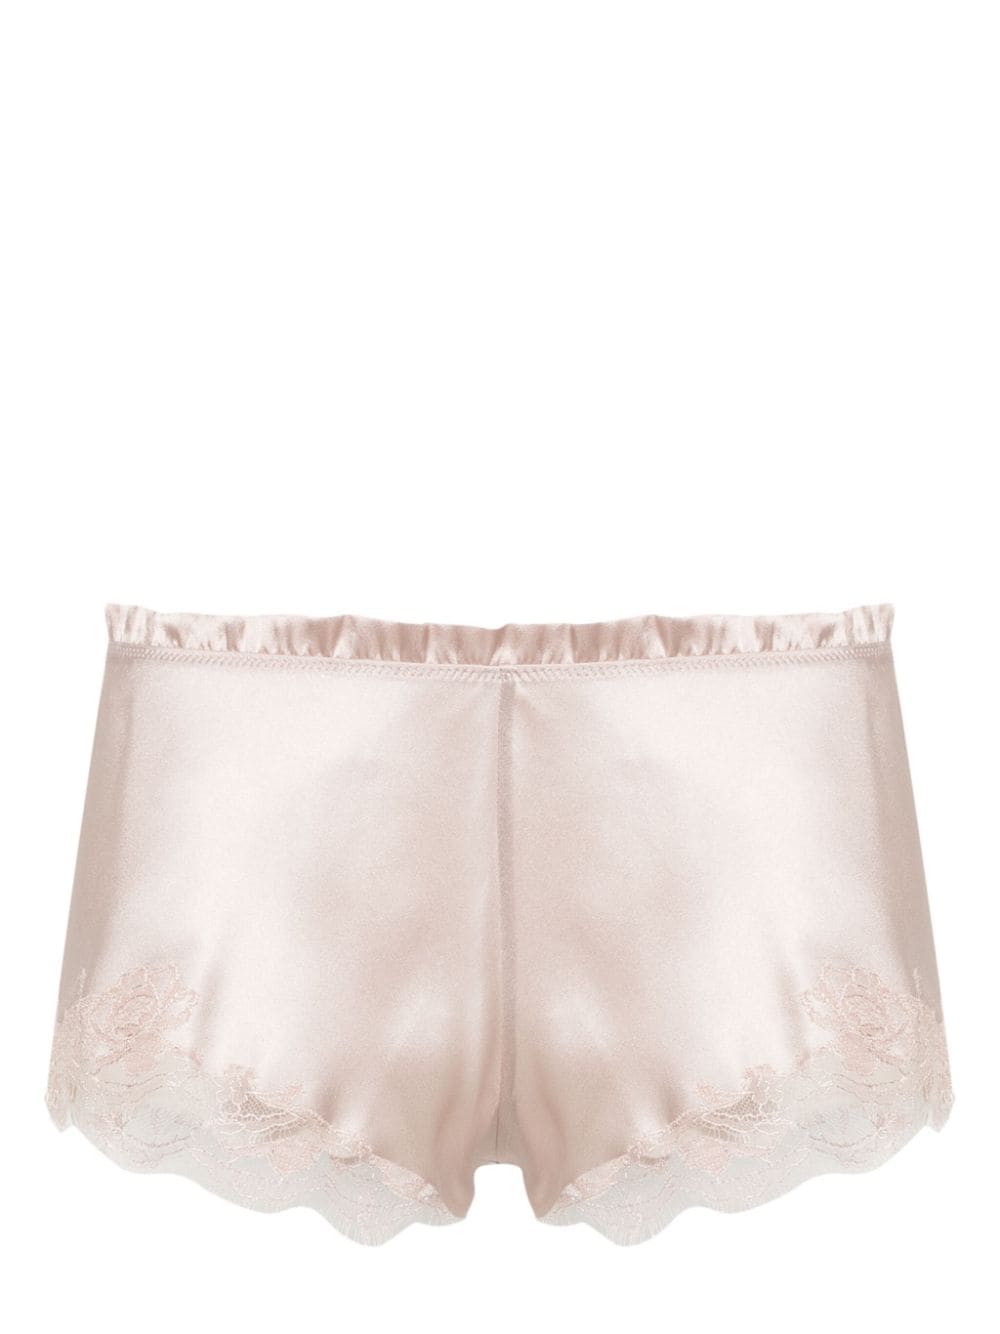 Carine Gilson Calais-Caudry lace-trim silk shorts - Pink von Carine Gilson